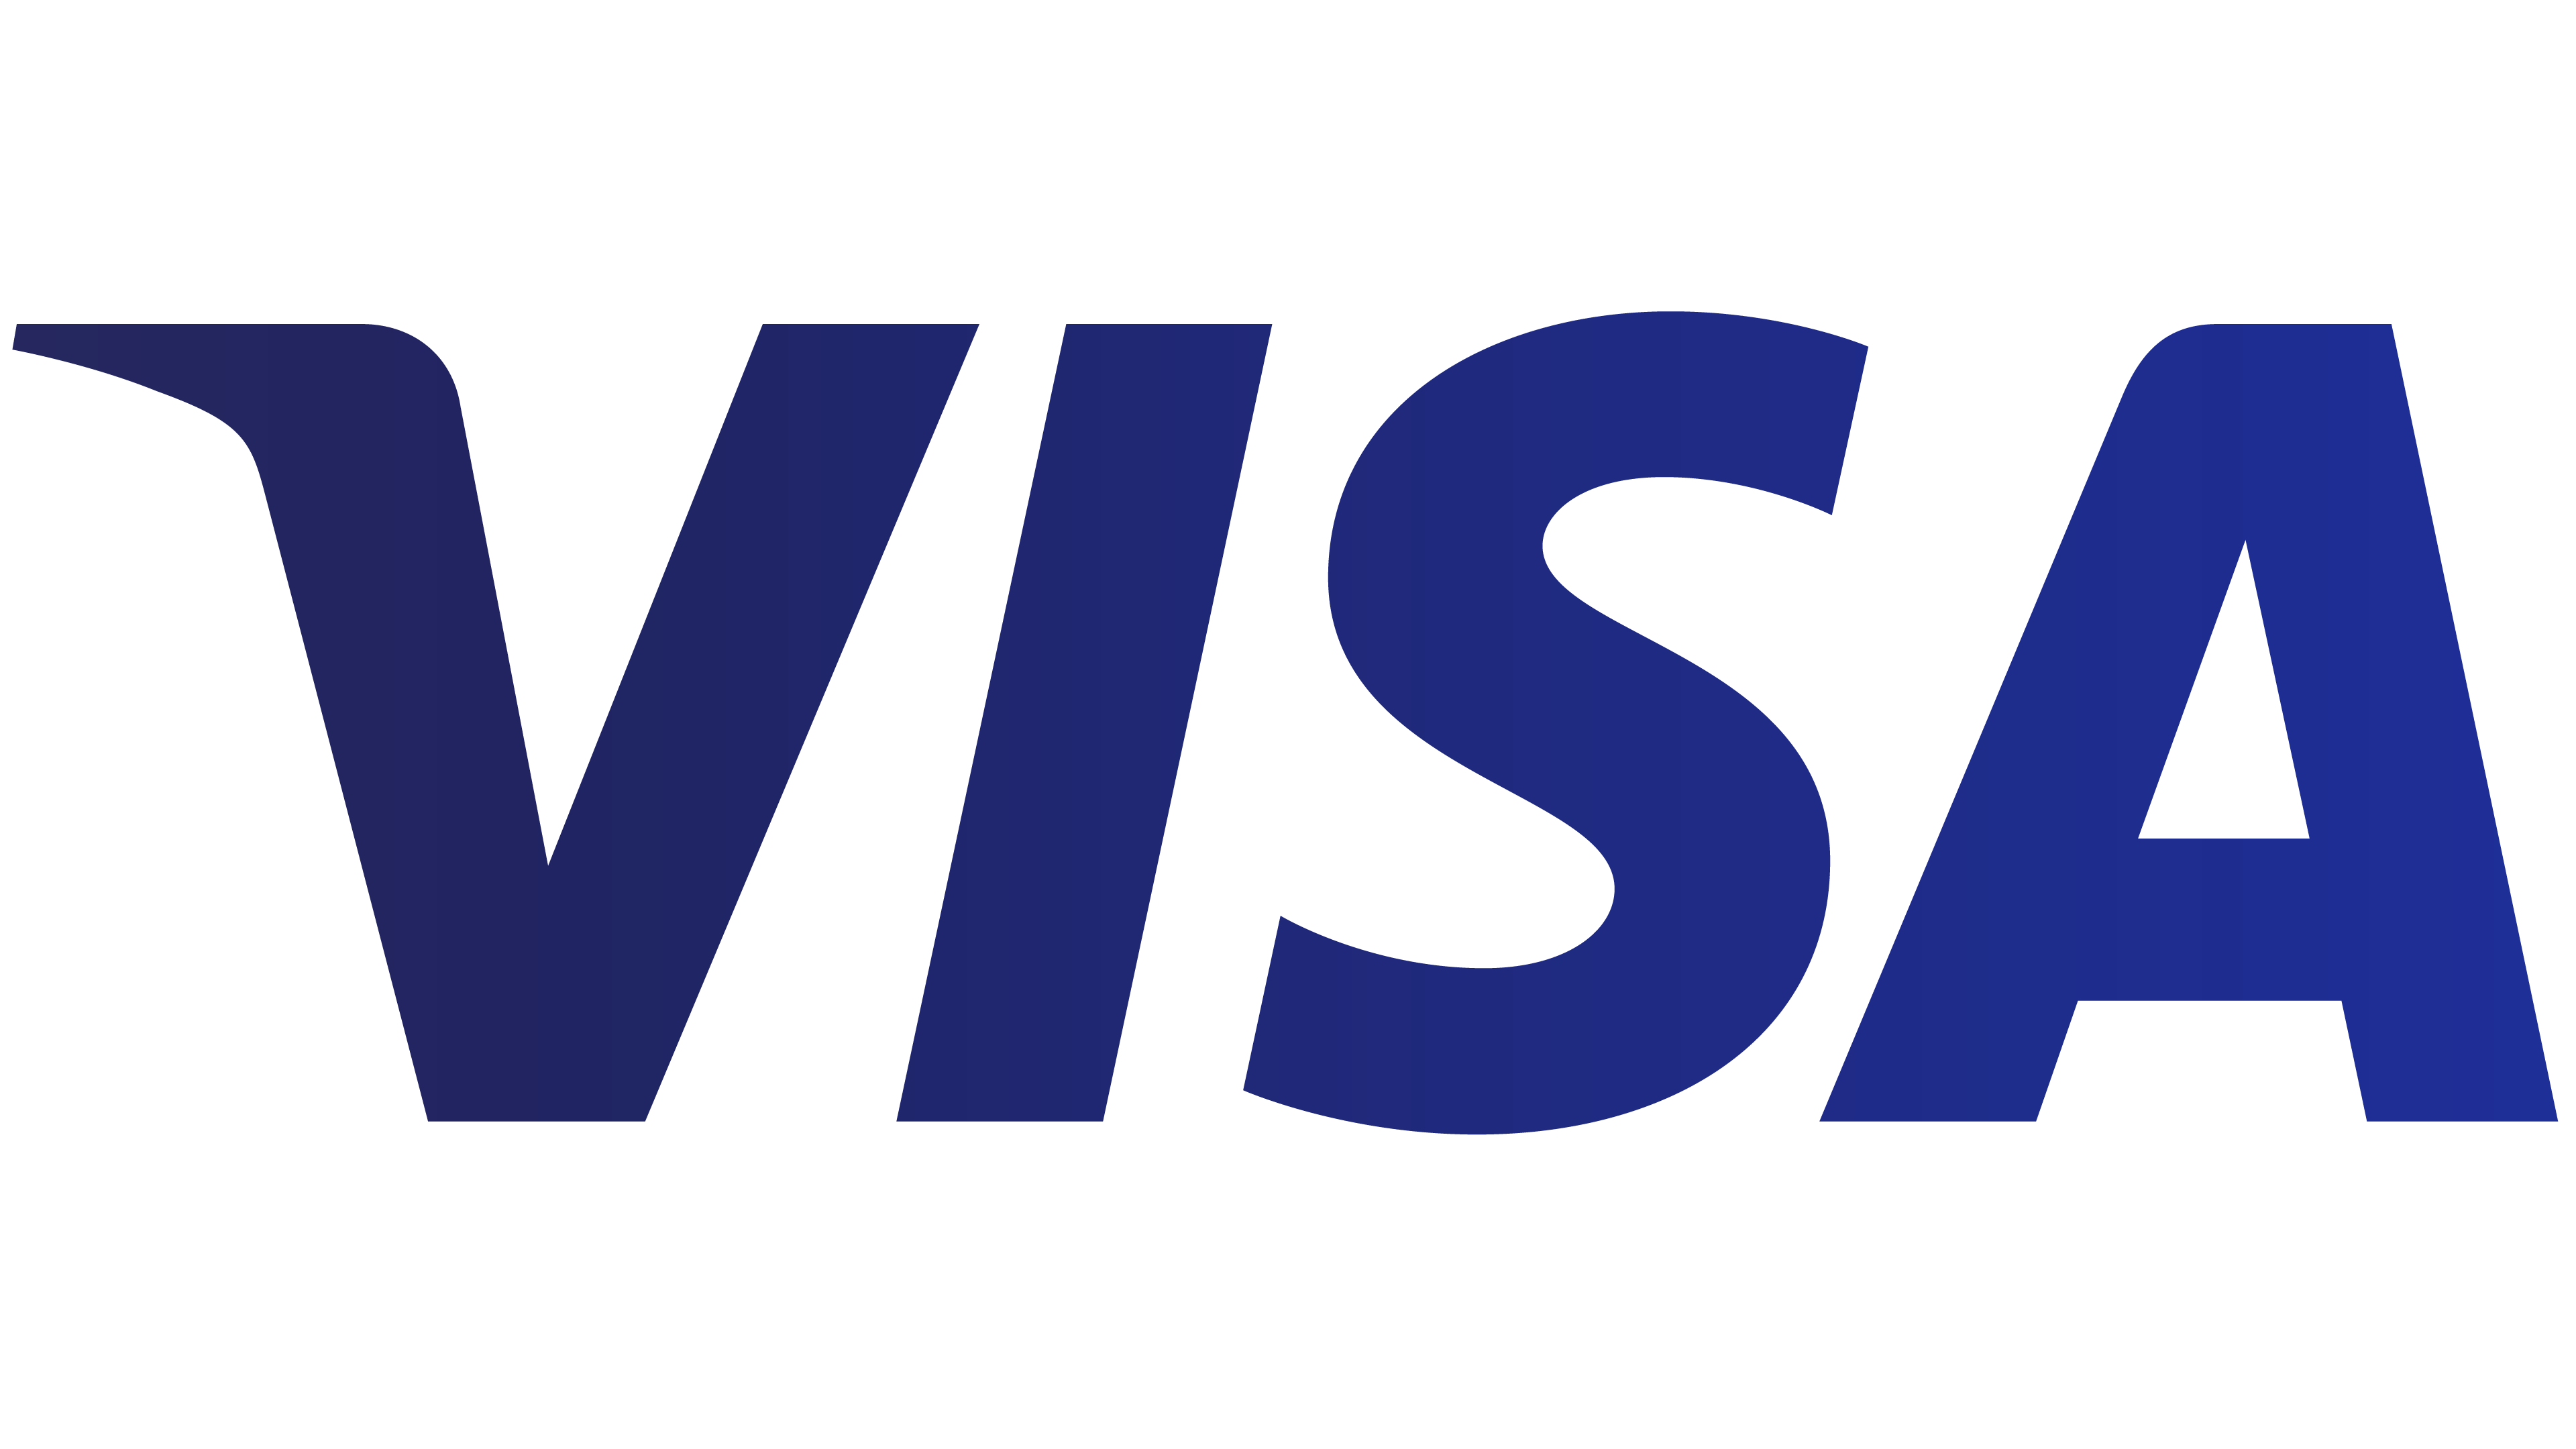 Vissa Logo - VISA-logo | Saborea Puerto Rico | April 4-7, 2019